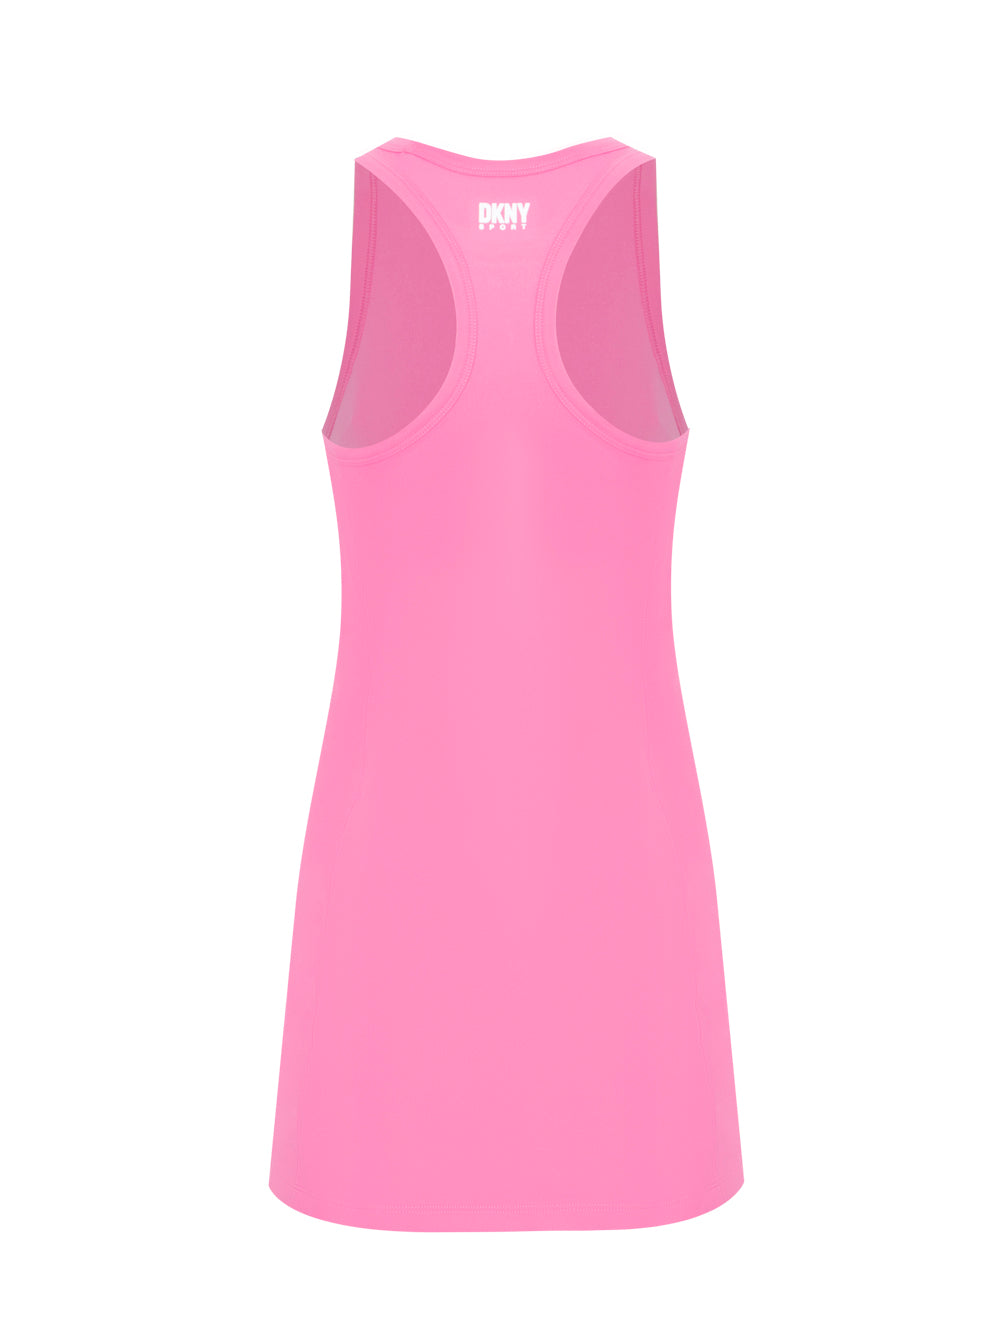 Balance Compression Racerback Tennis Dress With Built In Bra (Azalea Pink)